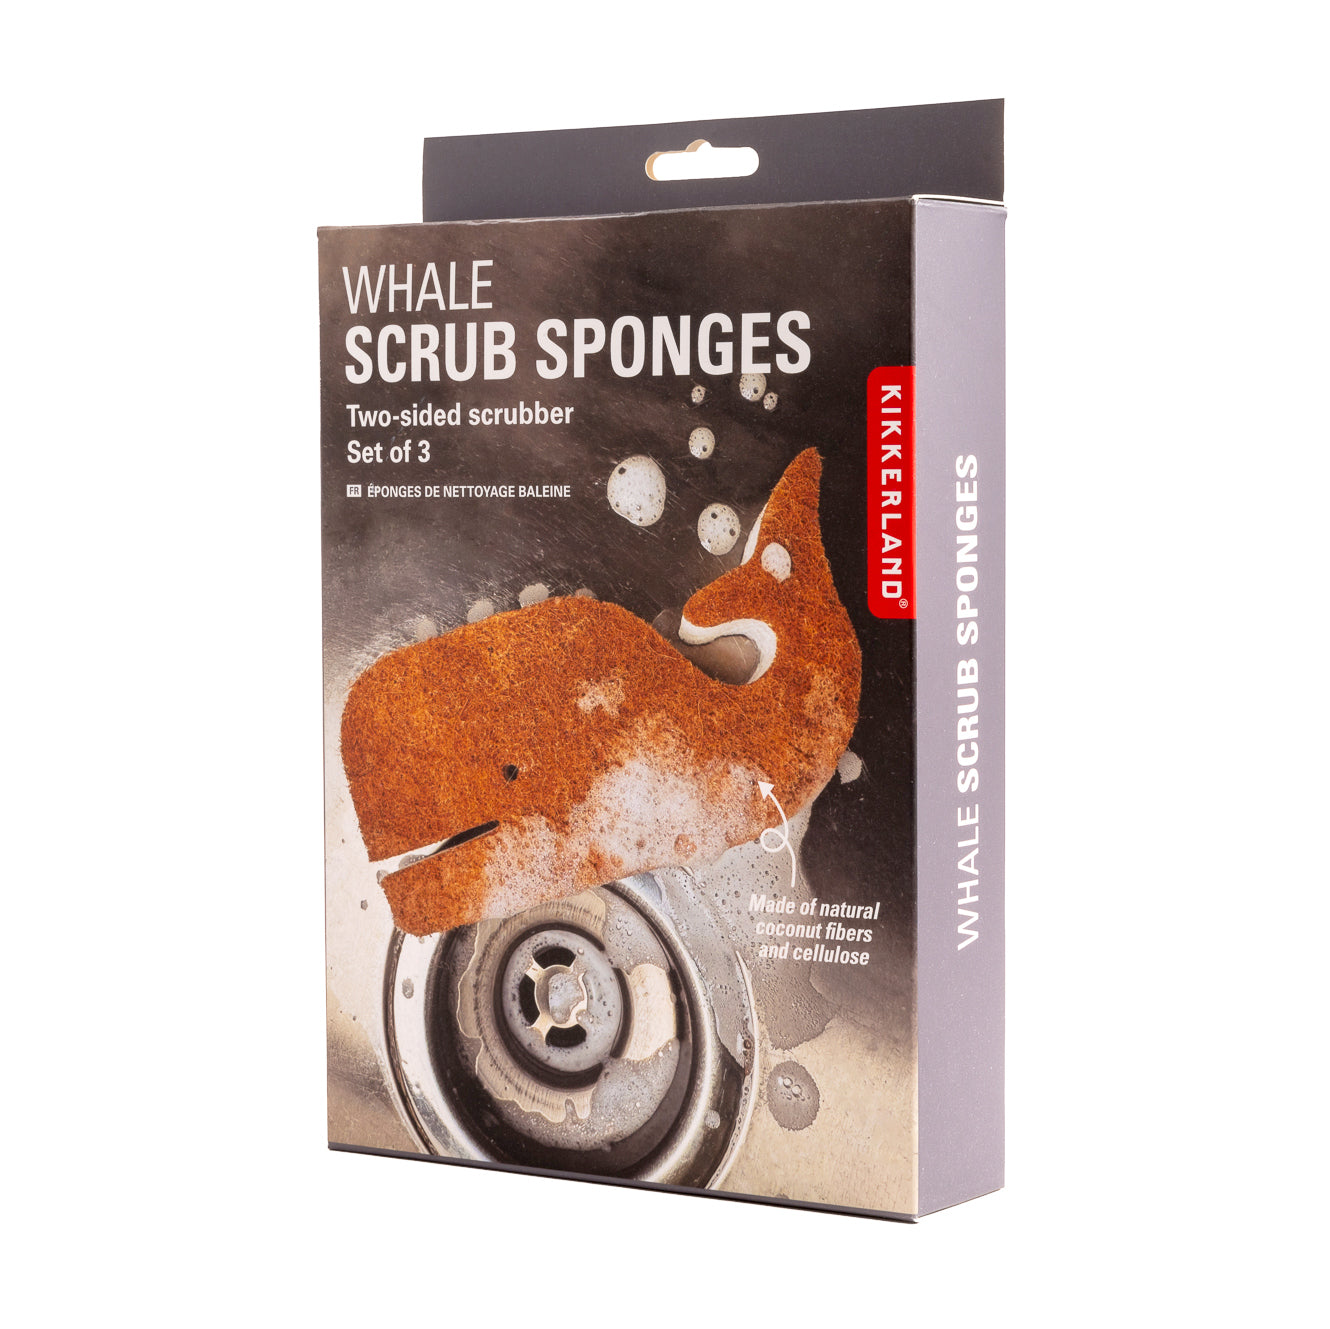 Whale Scrub Sponges